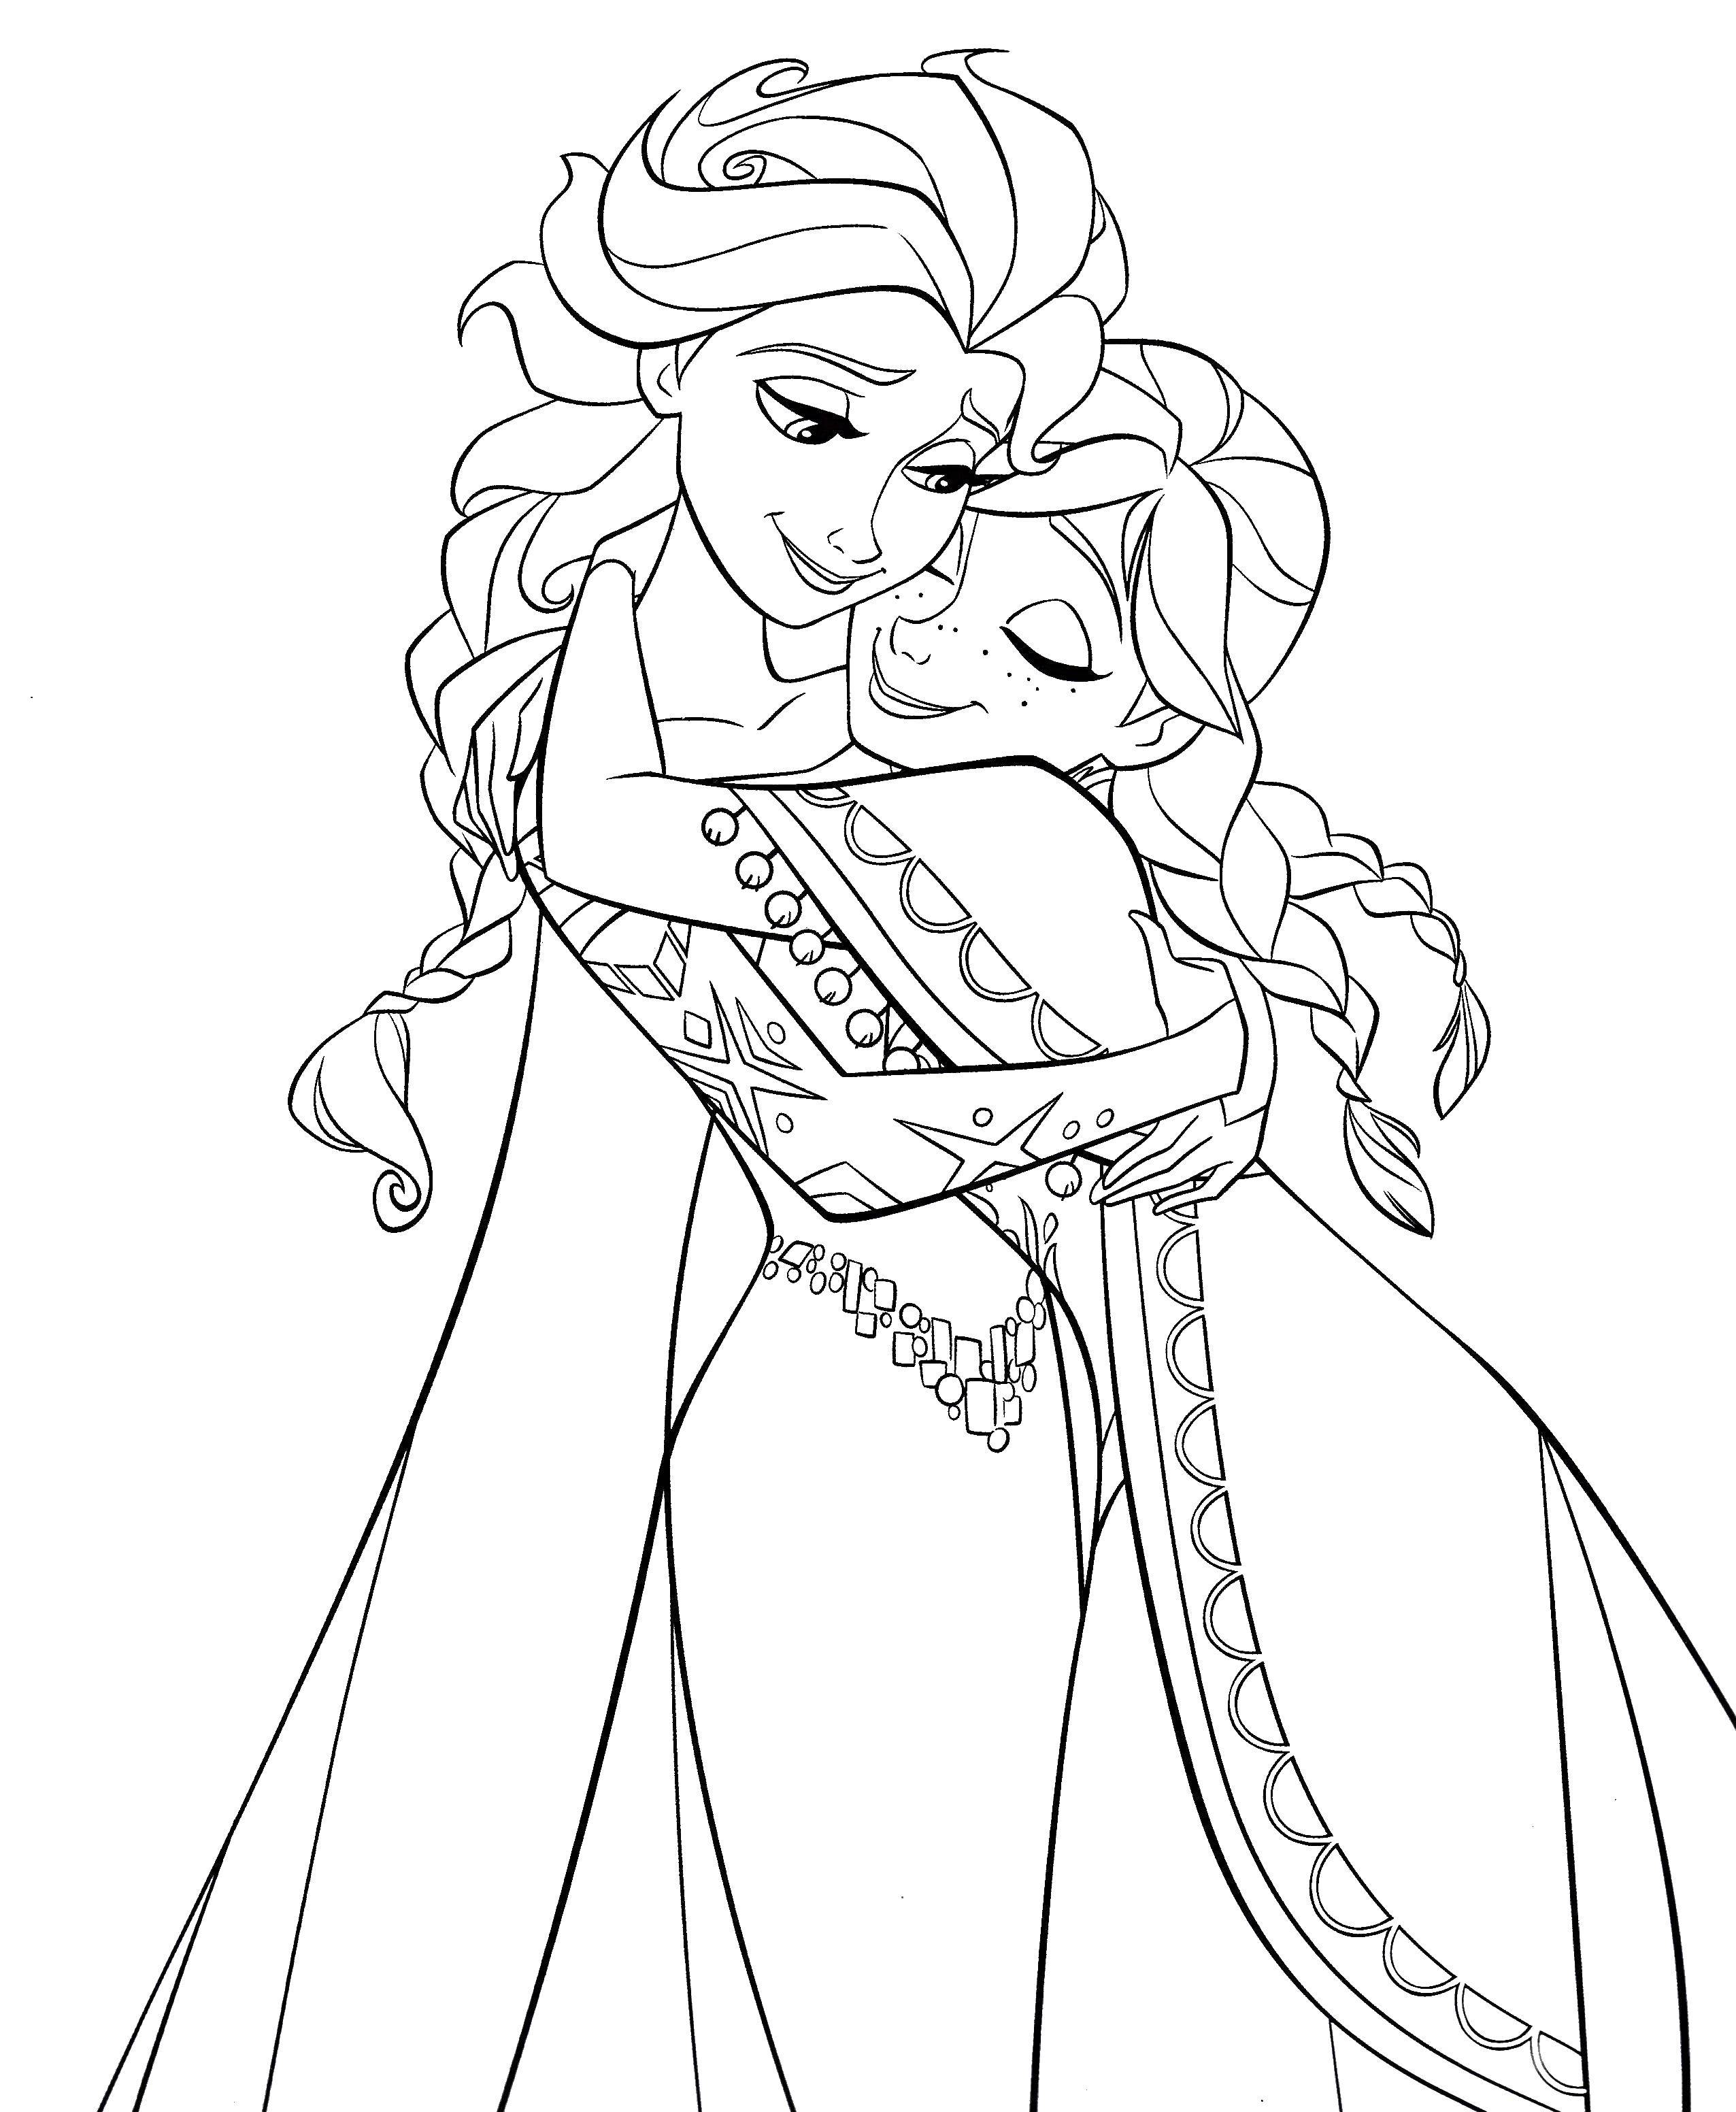 Coloring Anna hugging Elsa. Category coloring cold heart. Tags:  Anna , Elsa.